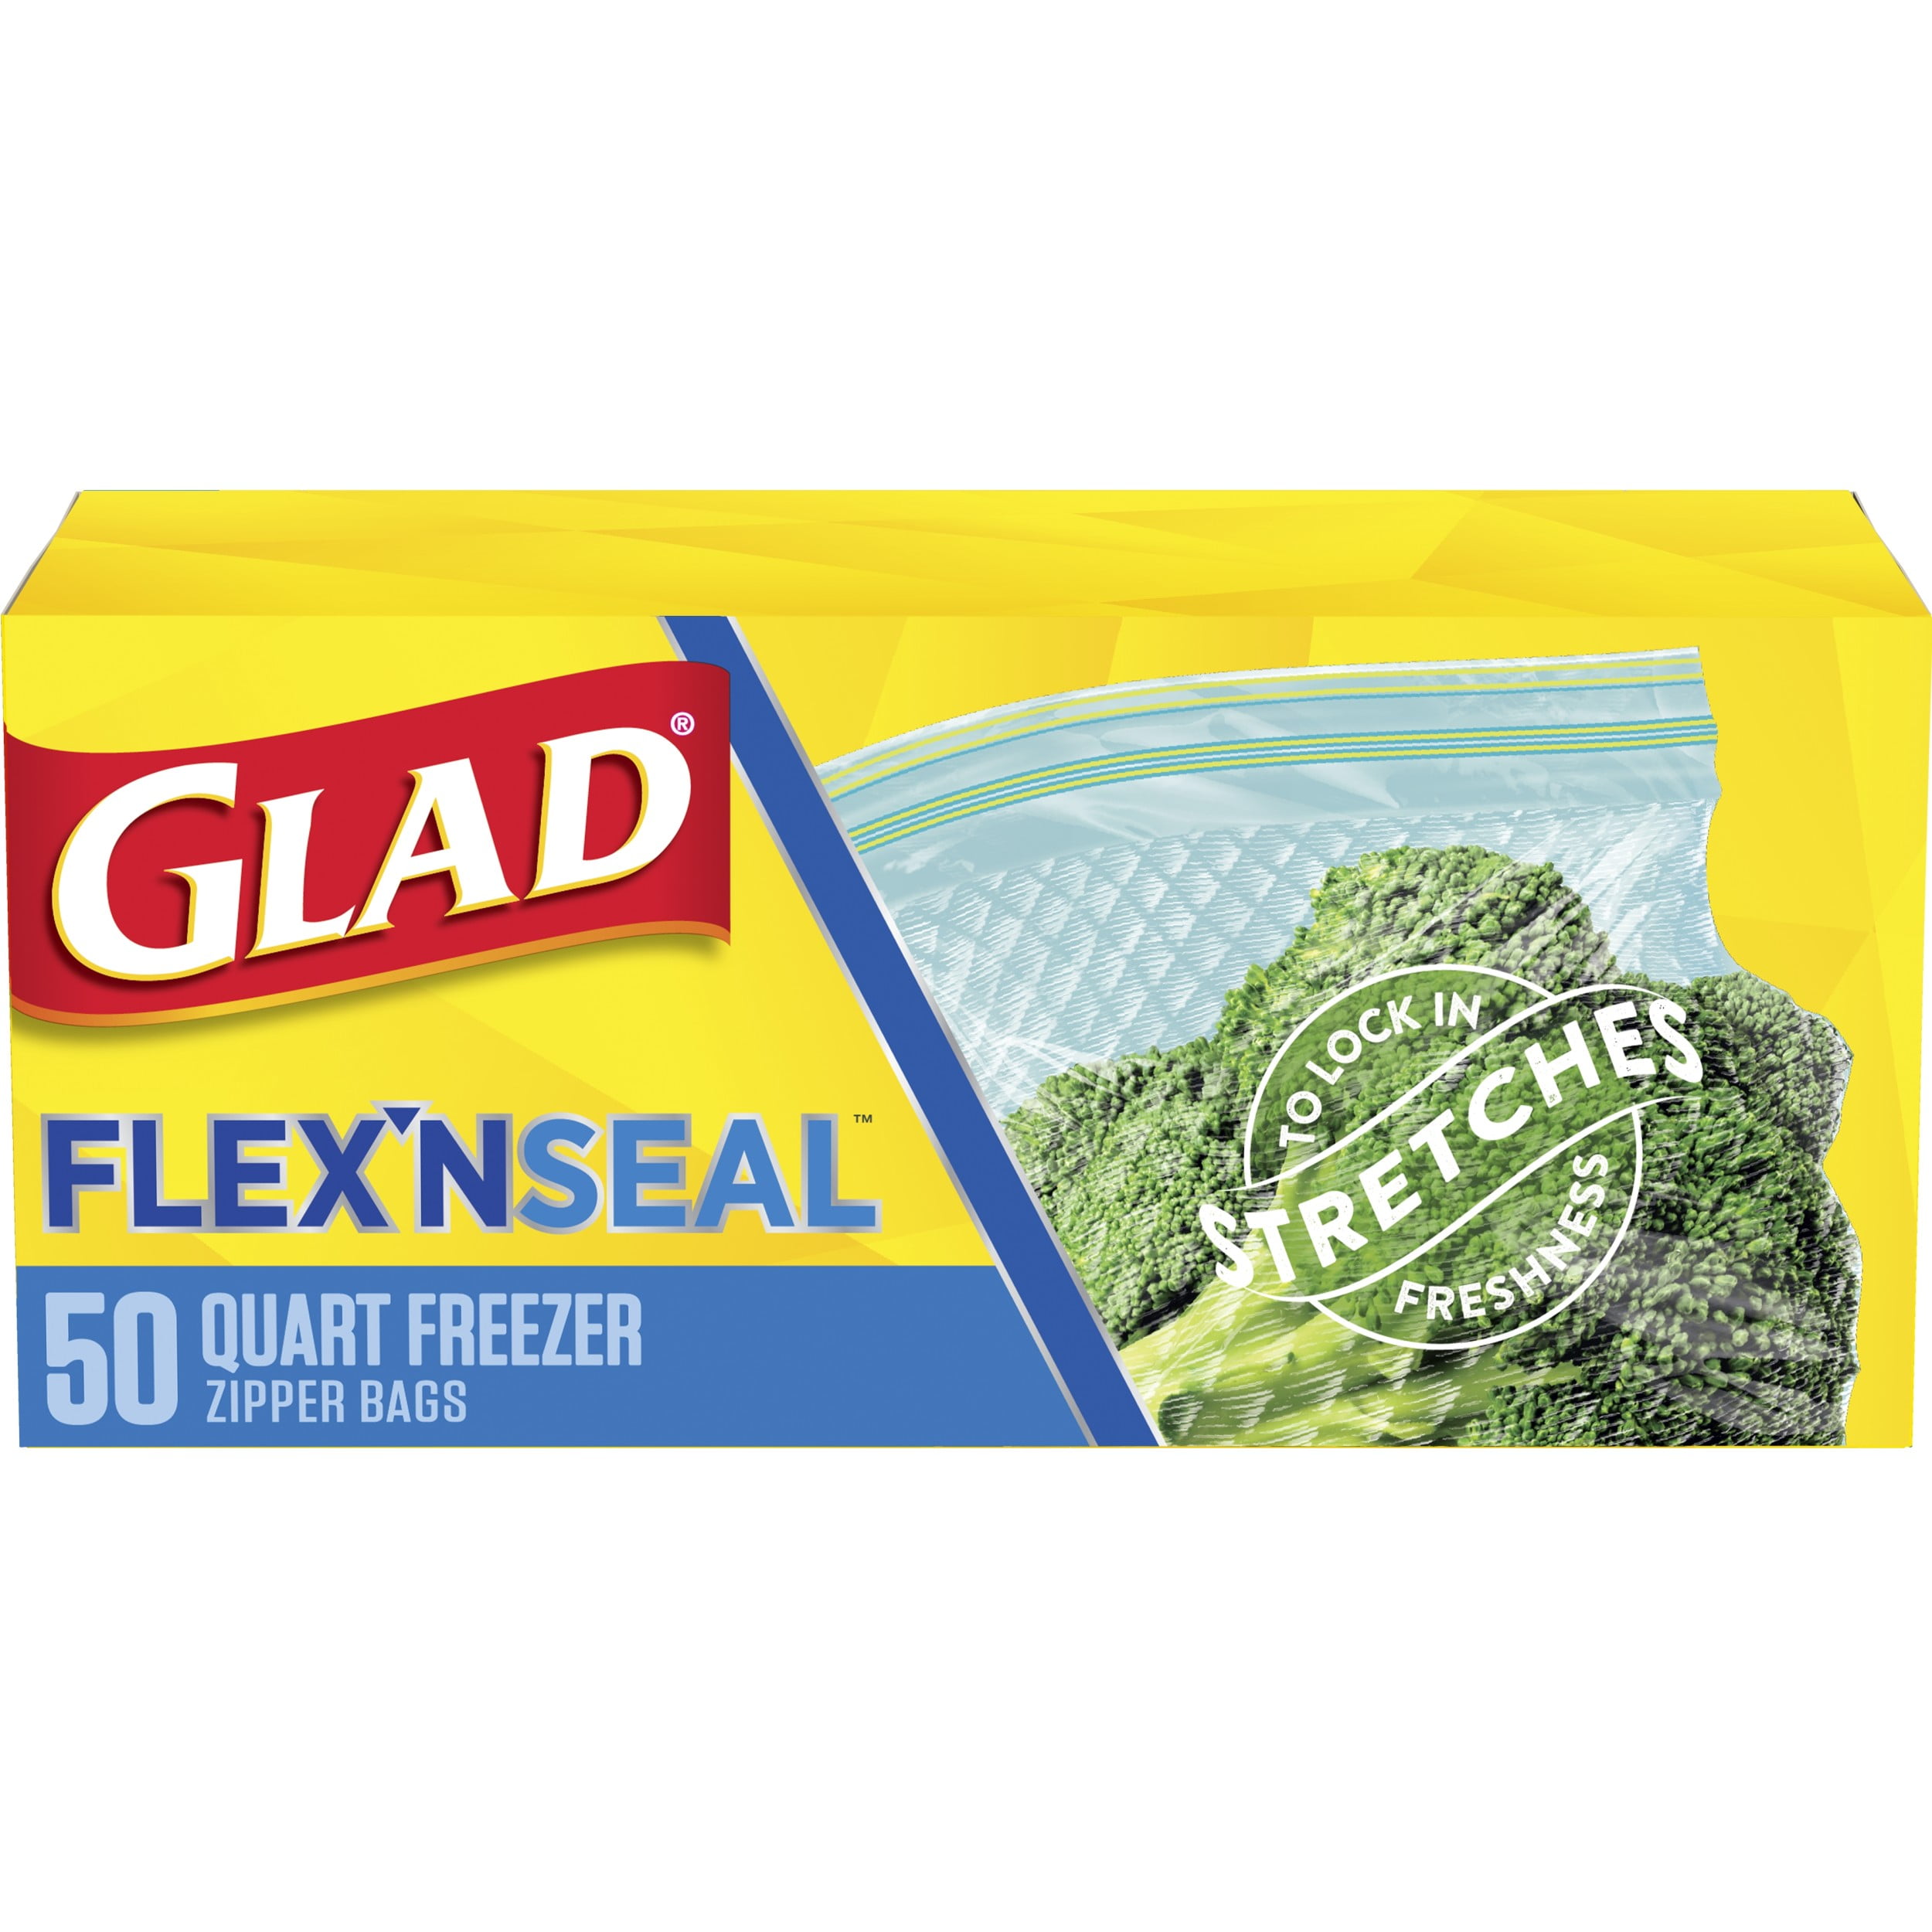 Glad FLEXN SEAL Zipper Freezer Storage Gallon Bags, 28 Count 